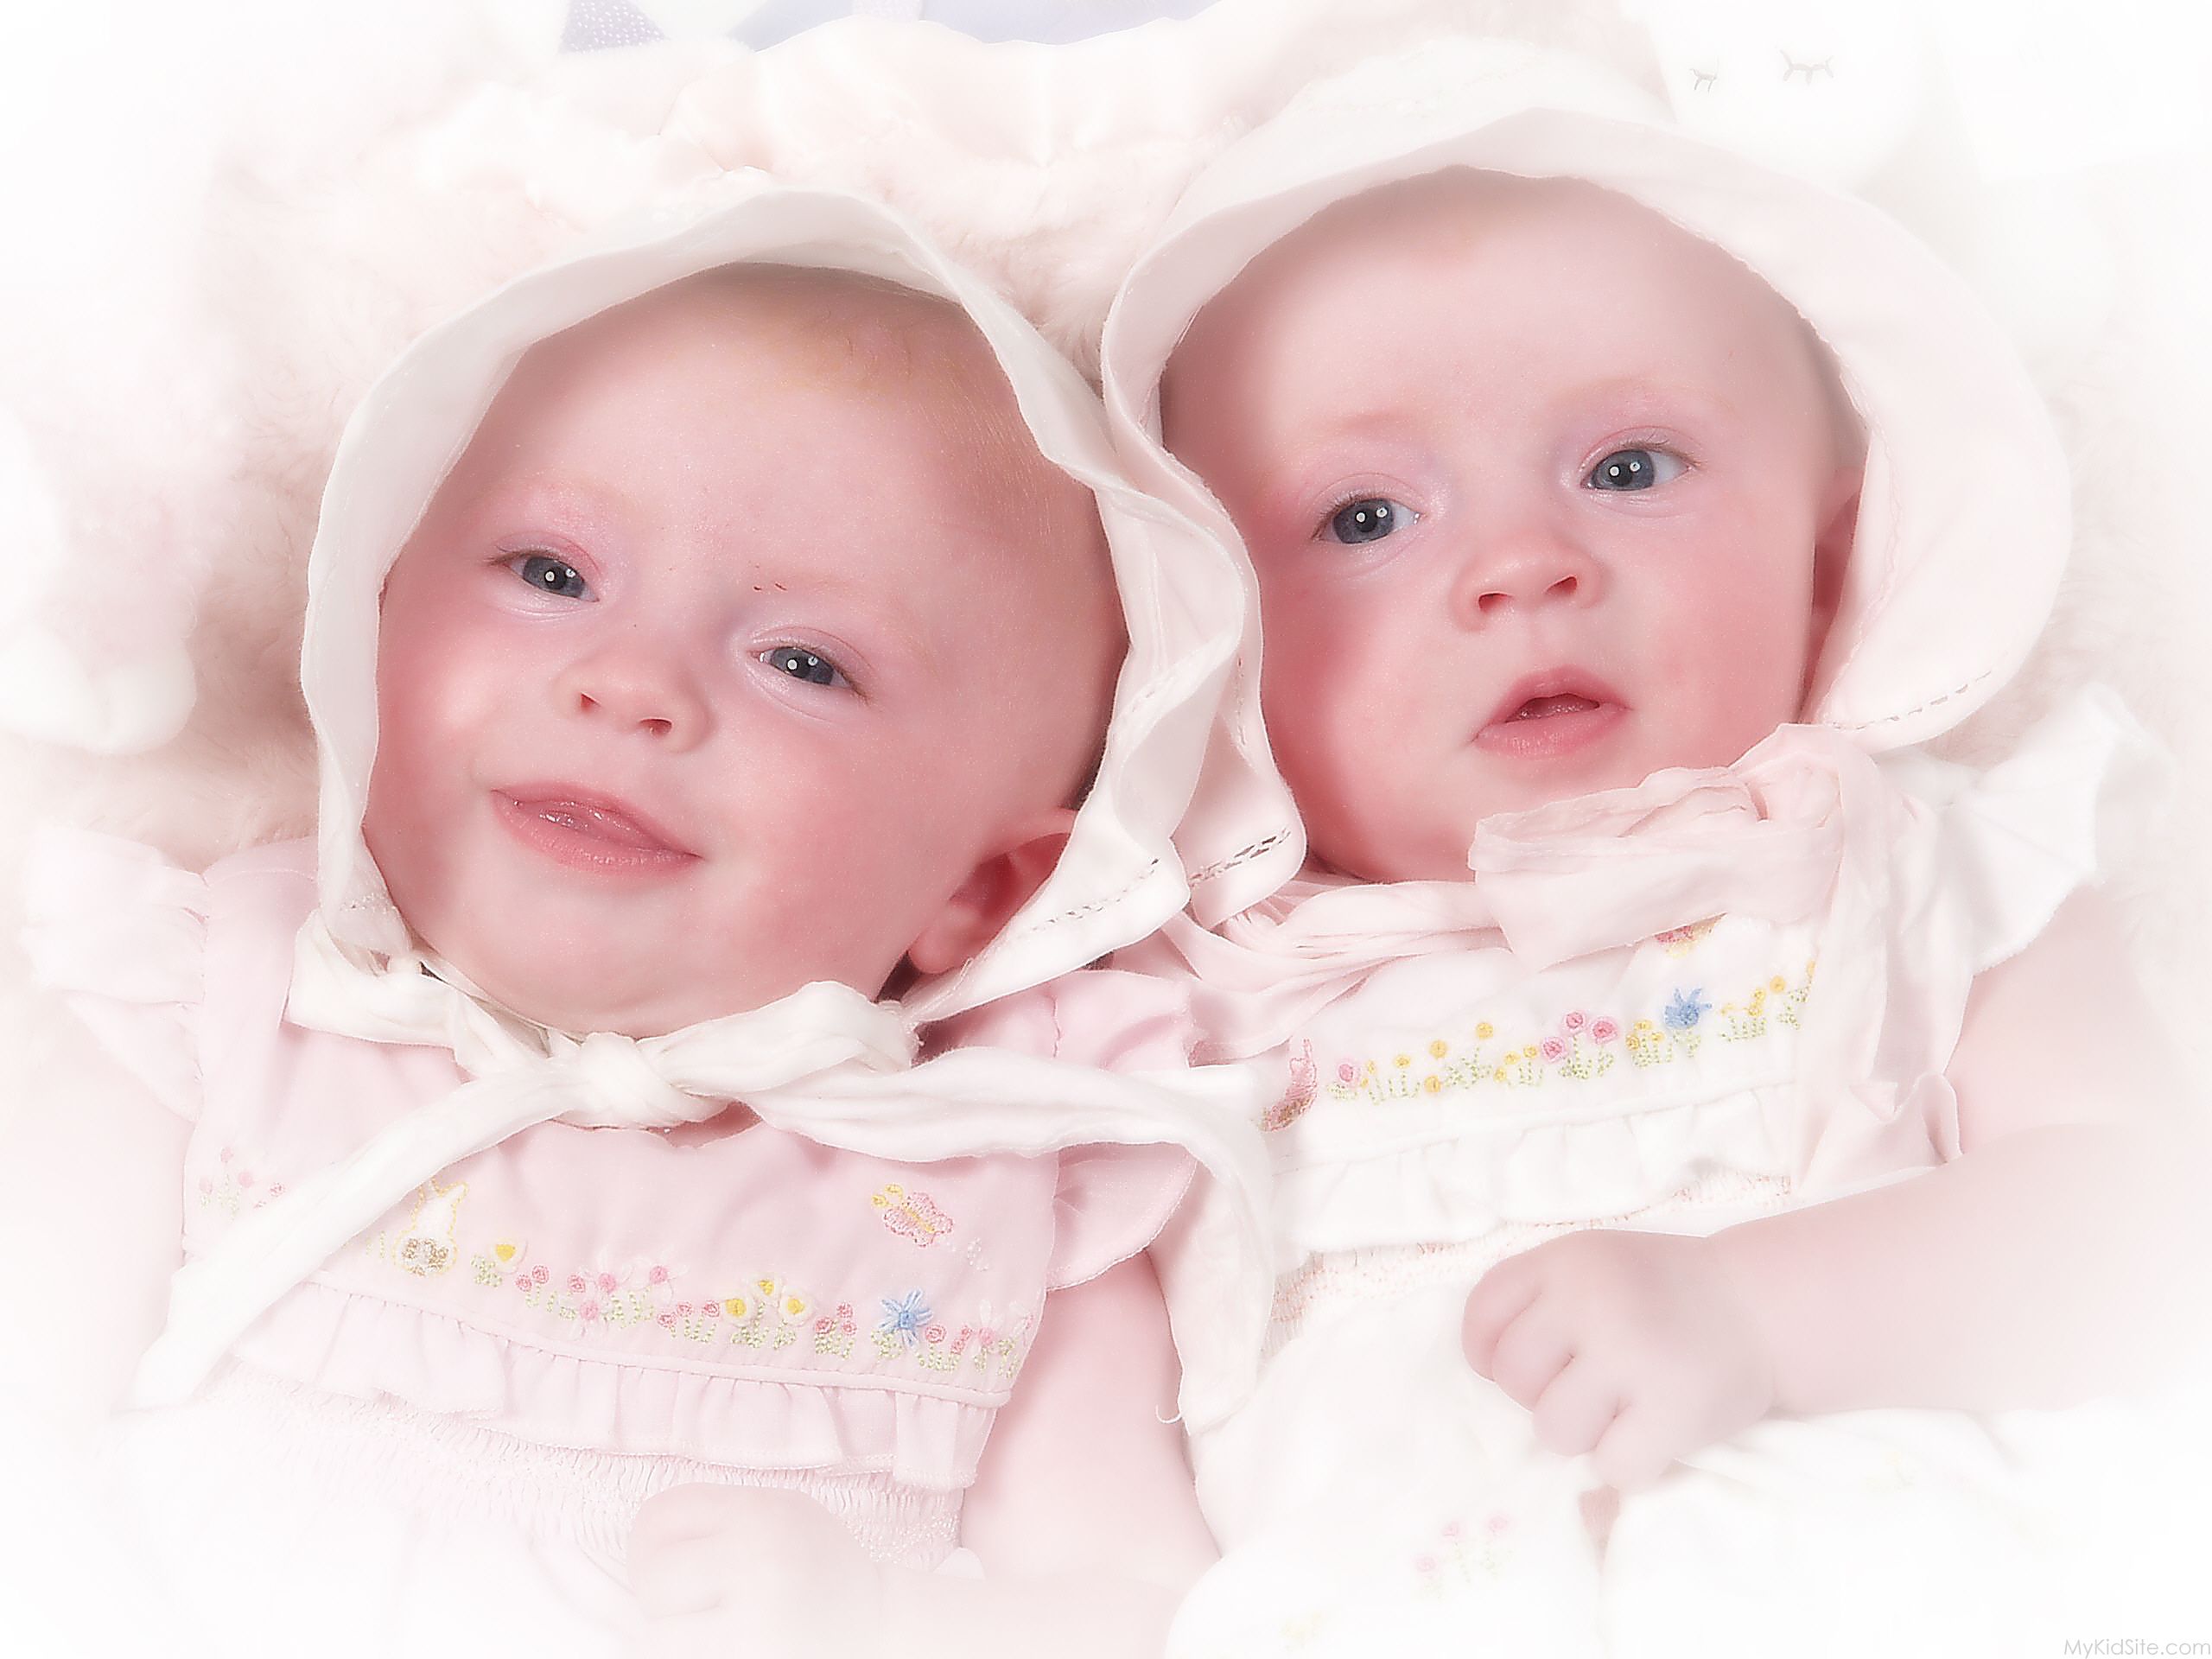 Sweet Twin Babies